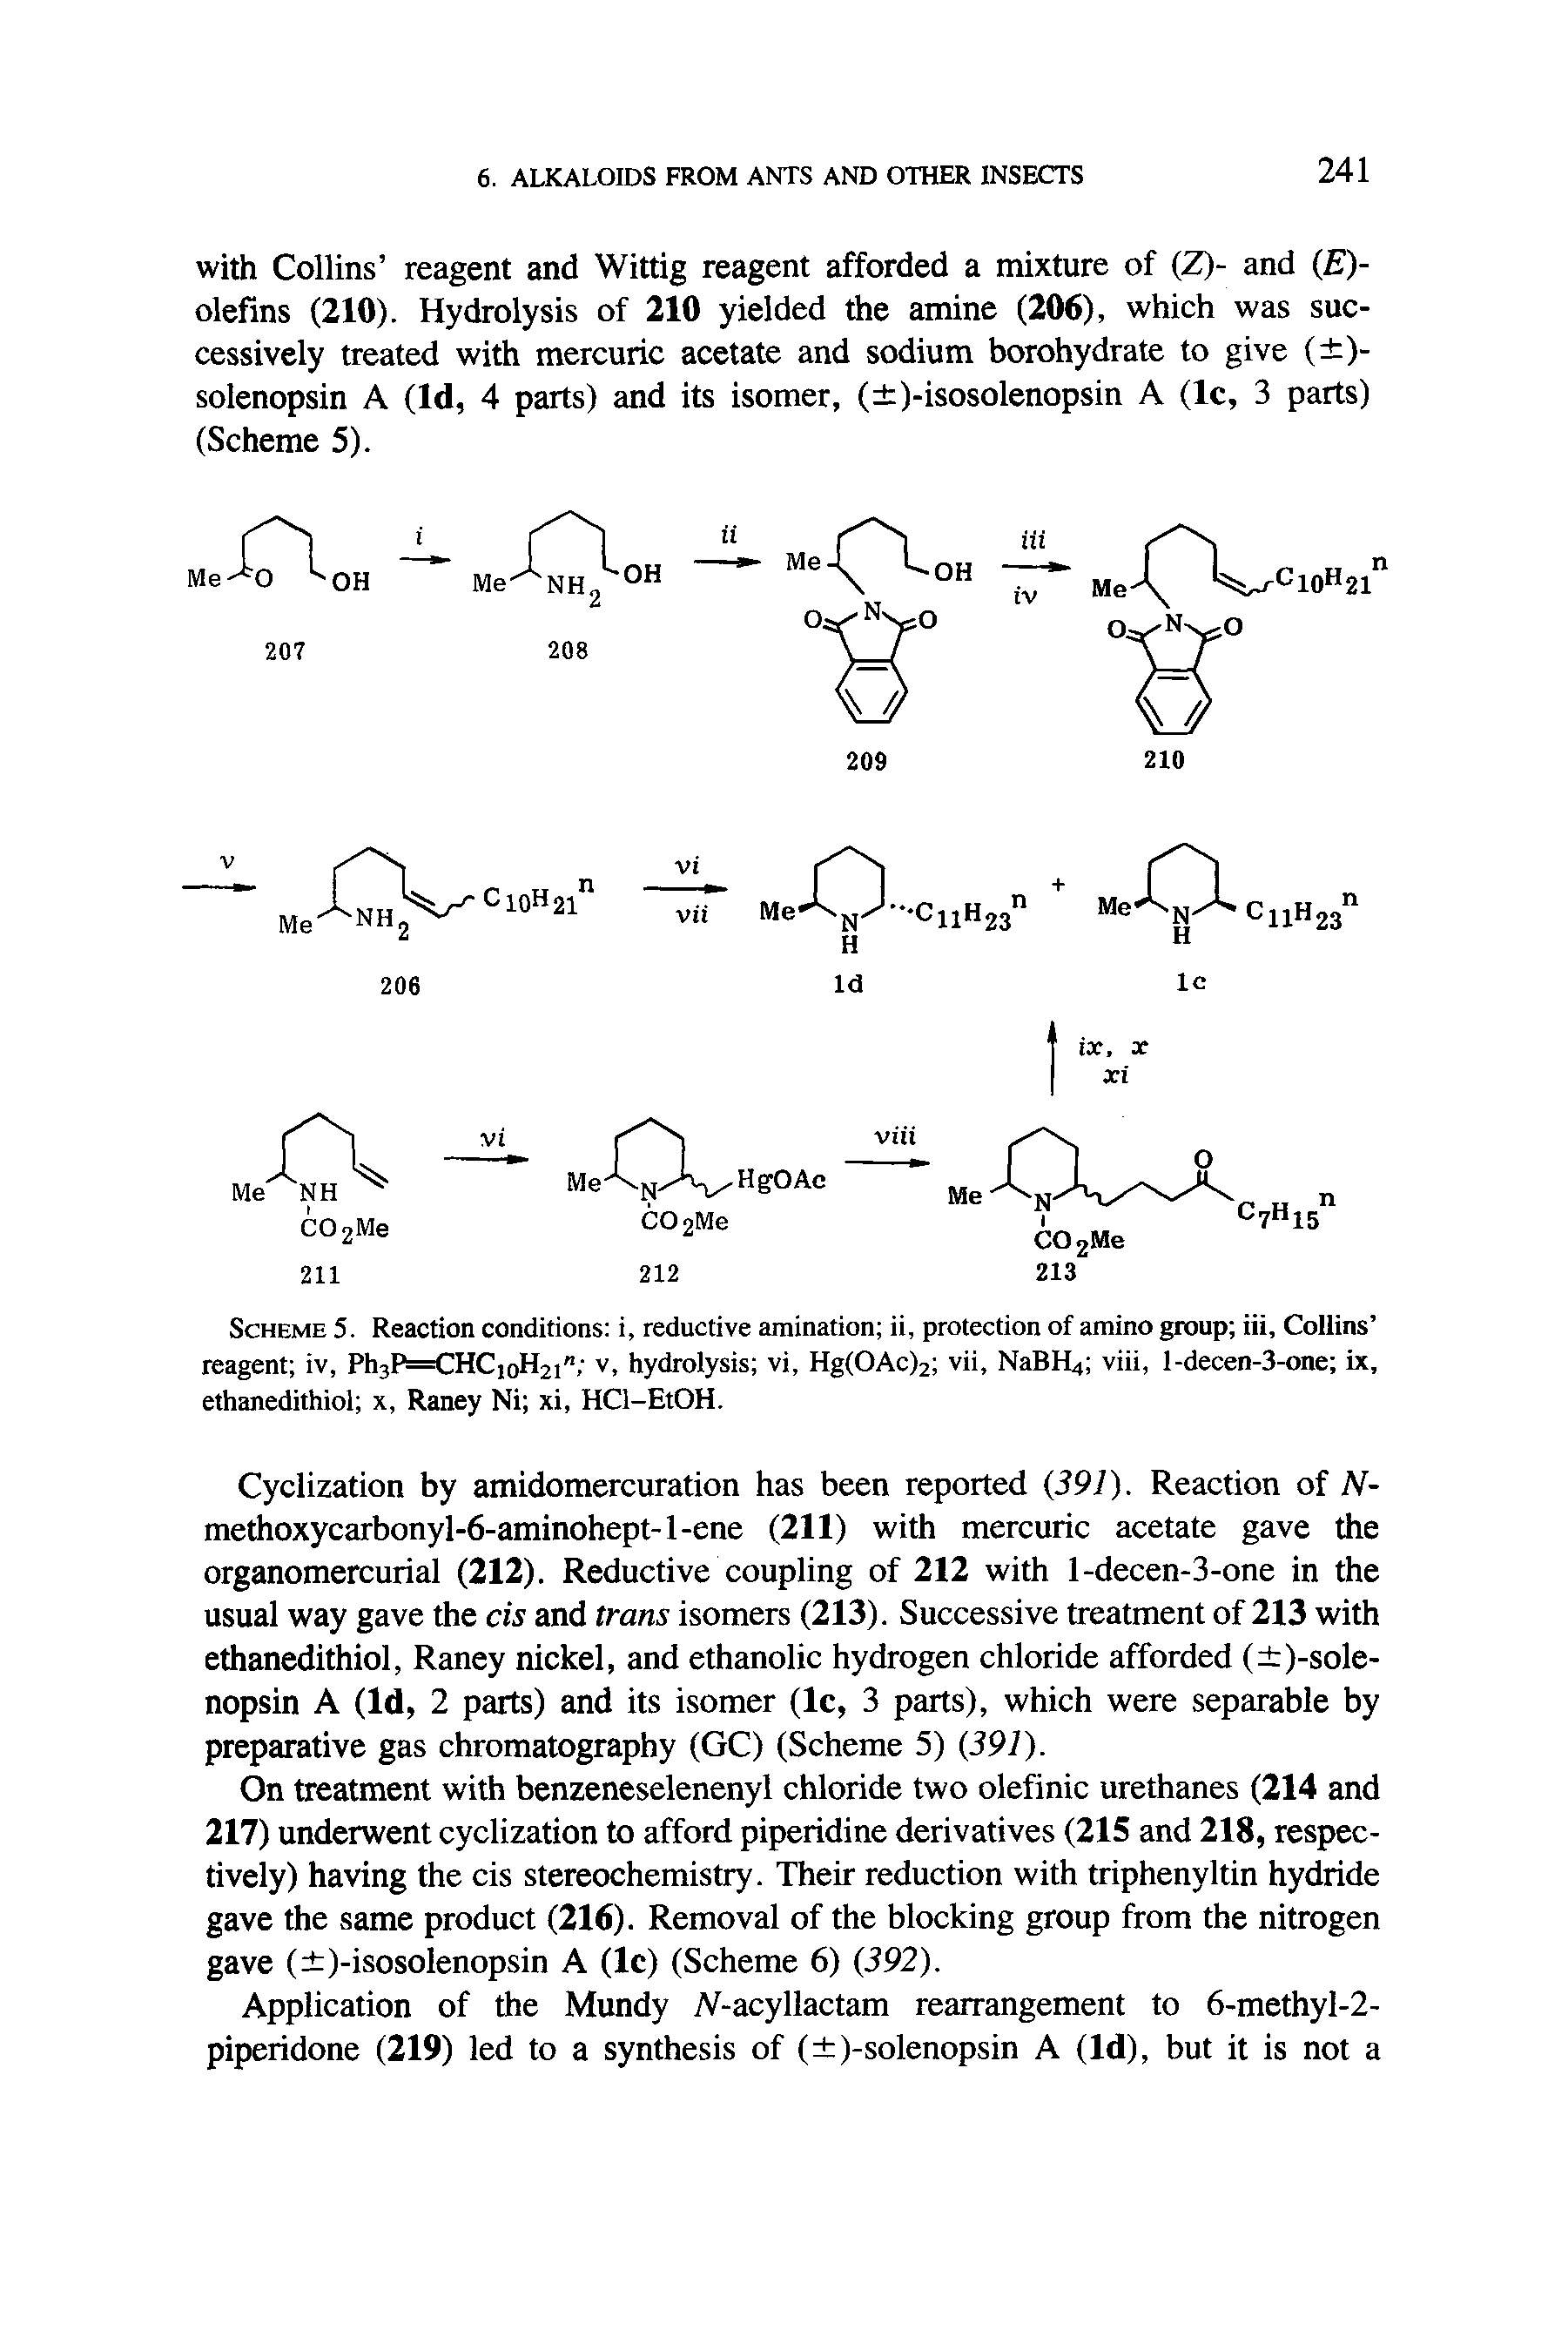 Scheme 5. Reaction conditions i, reductive amination ii, protection of amino group iii, Collins reagent iv, Ph3F CHCioH2i" v, hydrolysis vi, Hg(OAc>2 vii, NaBH4 viii, l-decen-3-one ix, ethanedithiol x, Raney Ni xi, HCl-EtOH.